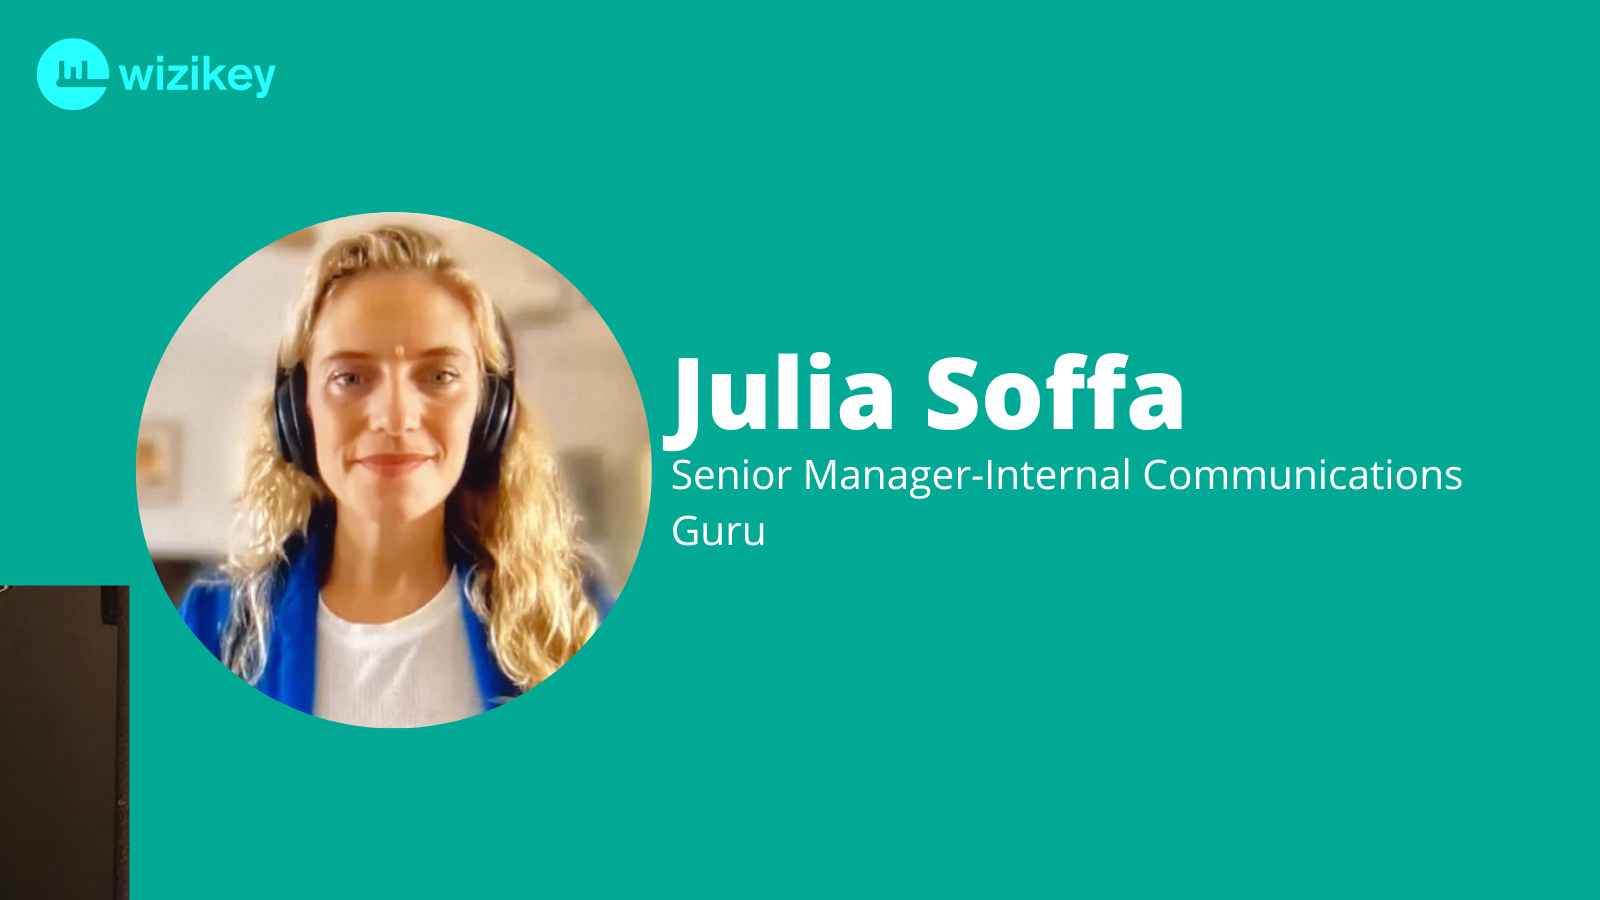 The world of internal and external communications is shifting: Julia Soffa from Guru